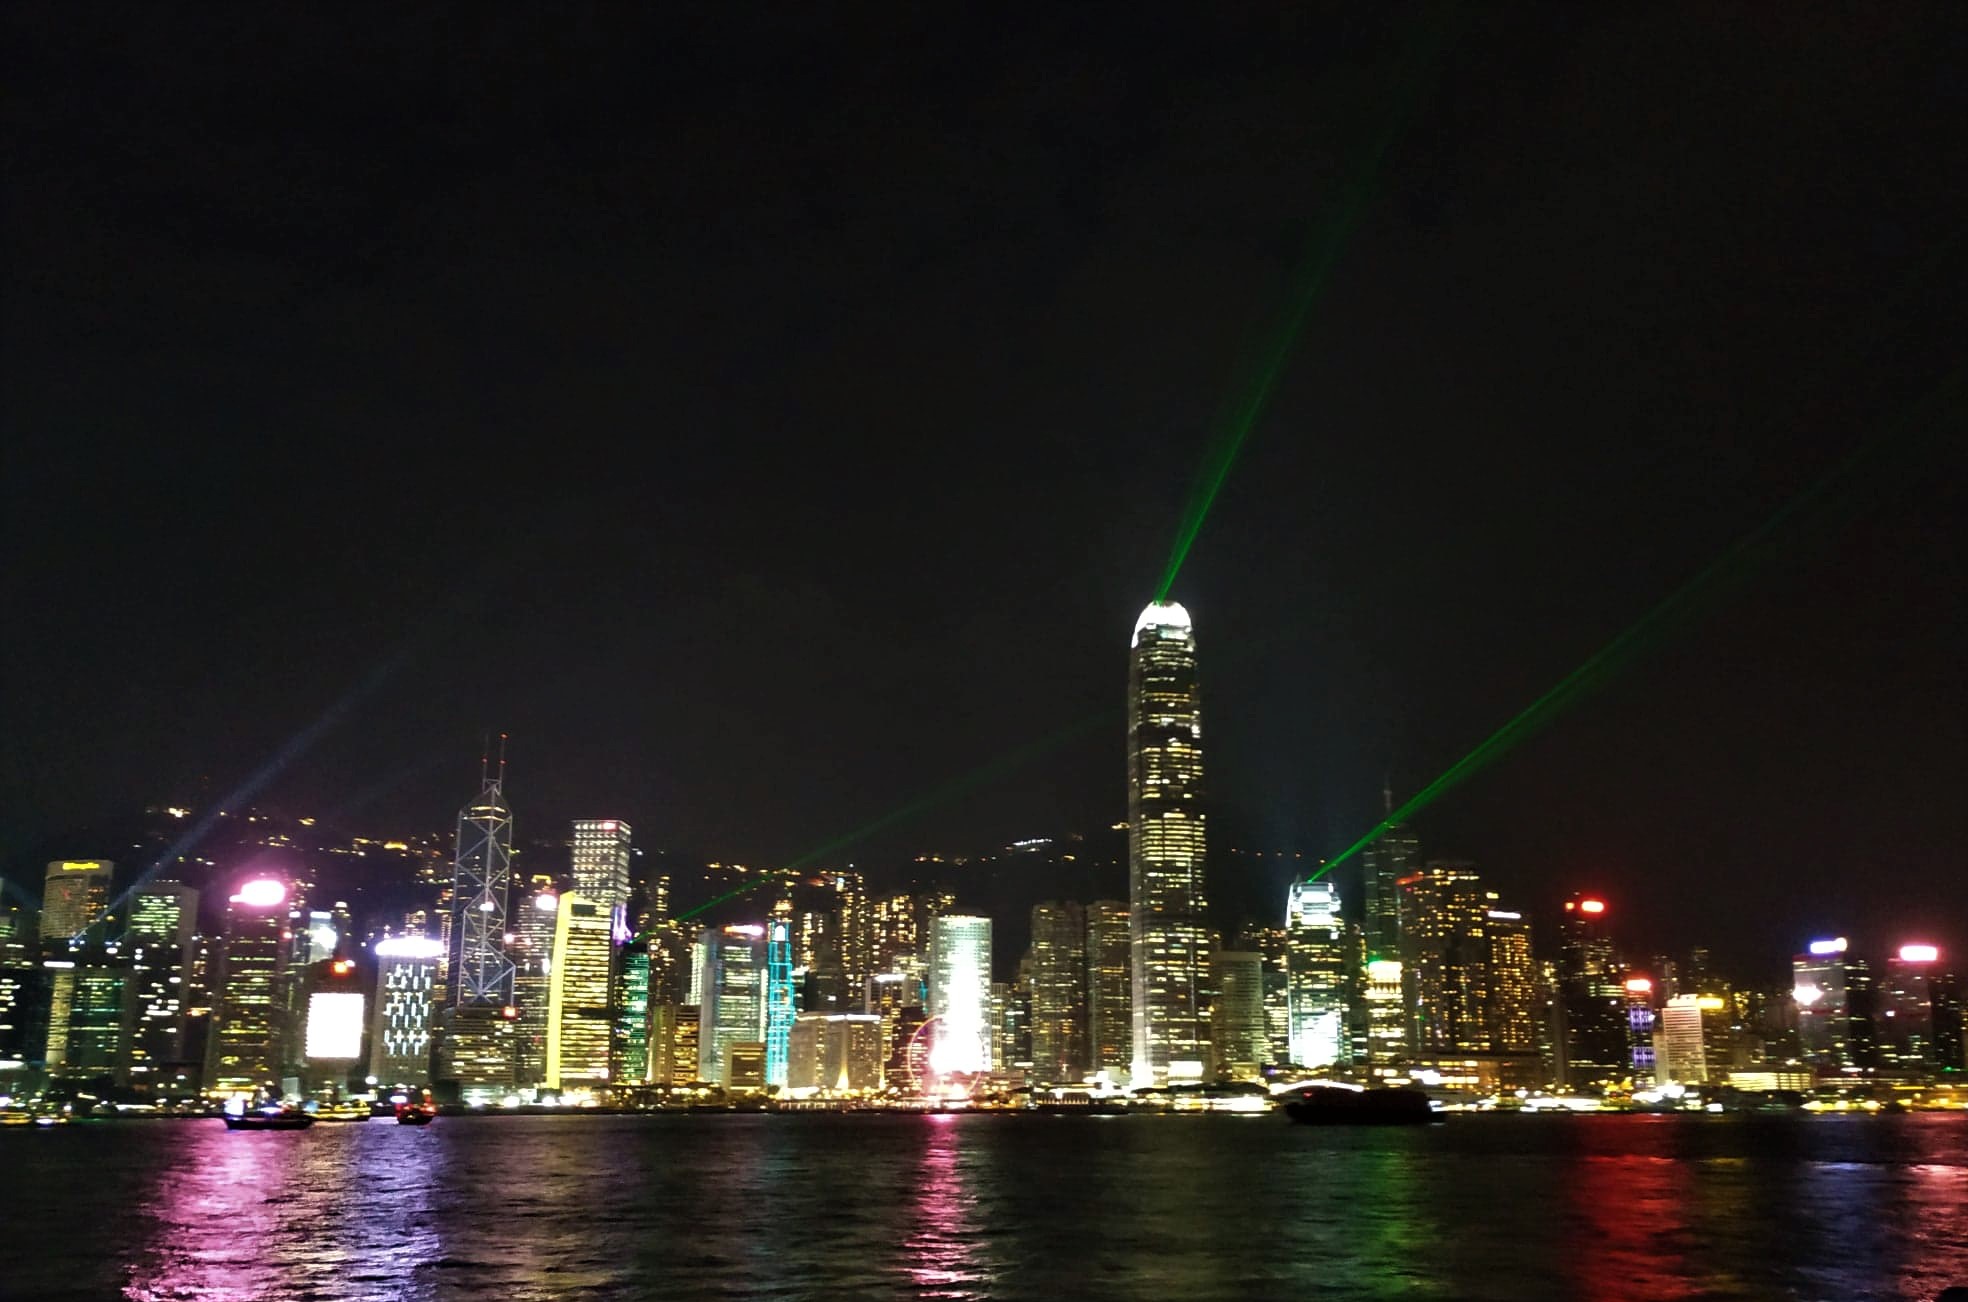 Sympany of lights, Hong Kong, photo by Monique